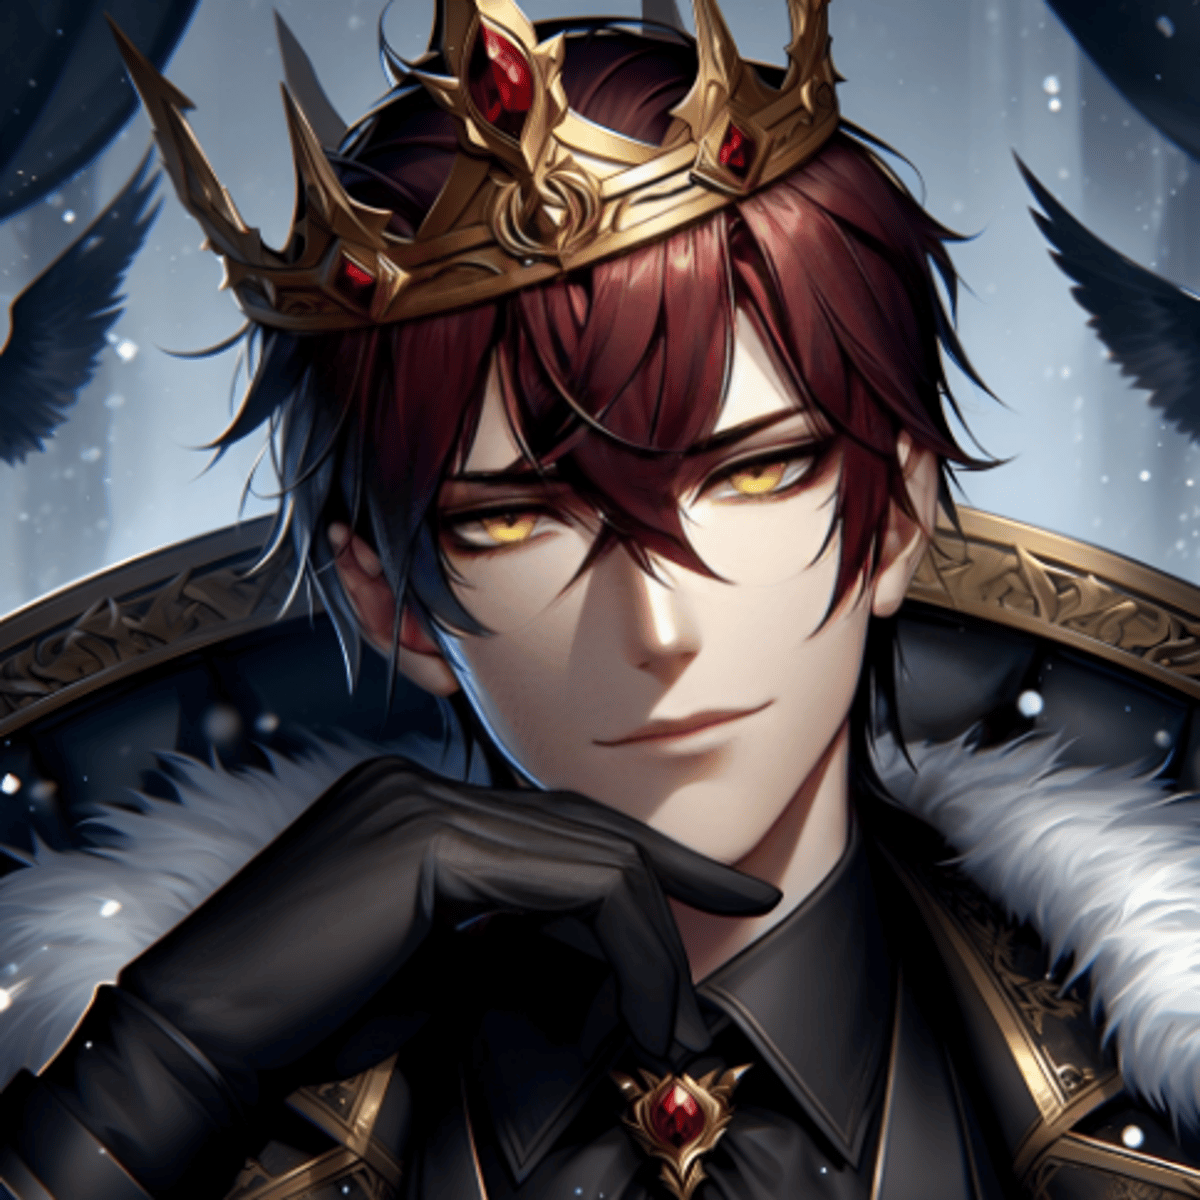 Emperor Ravenheart